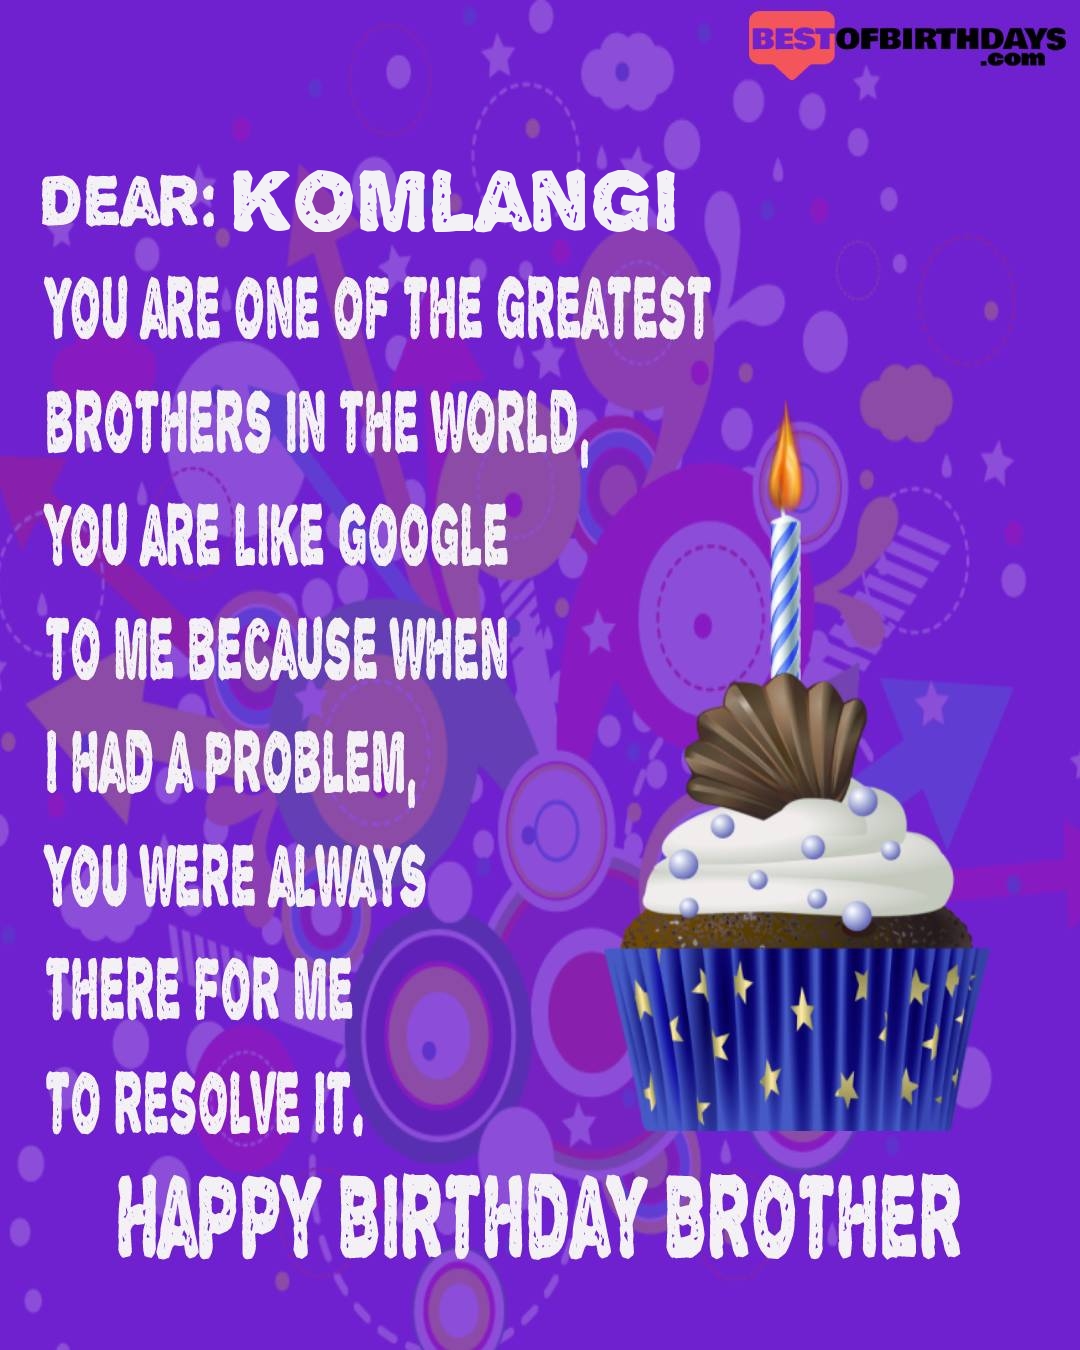 Happy birthday komlangi bhai brother bro